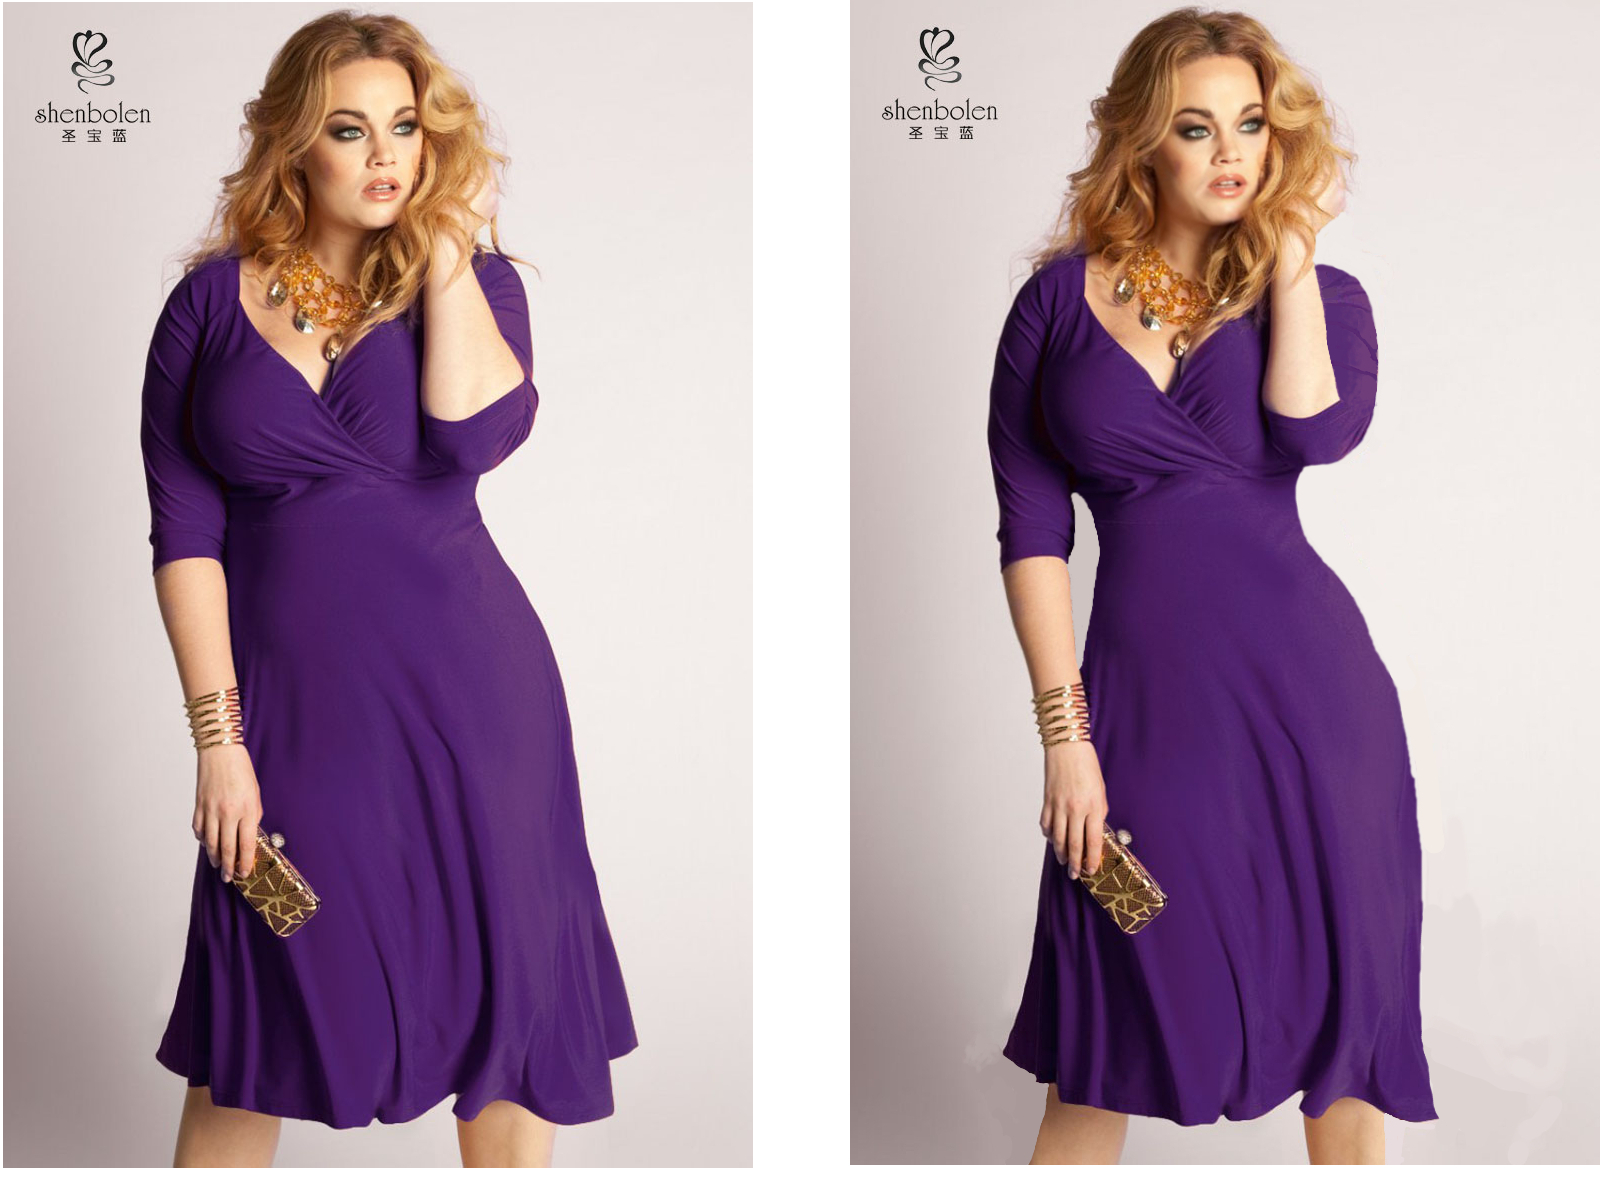 plus size dress purple - 02 shcabolen shenbolen